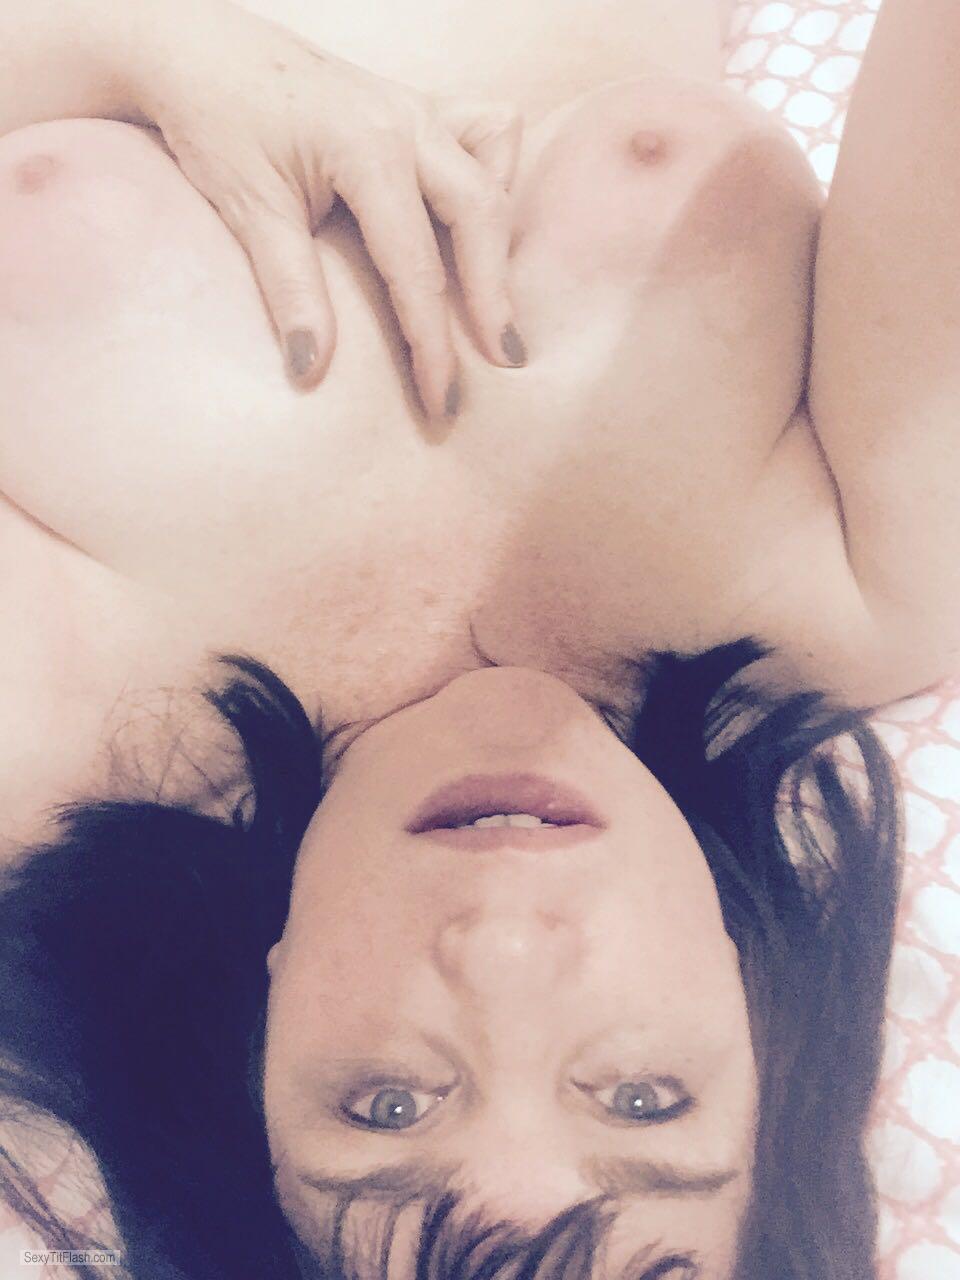 My Big Tits Topless Selfie by Ziervogel